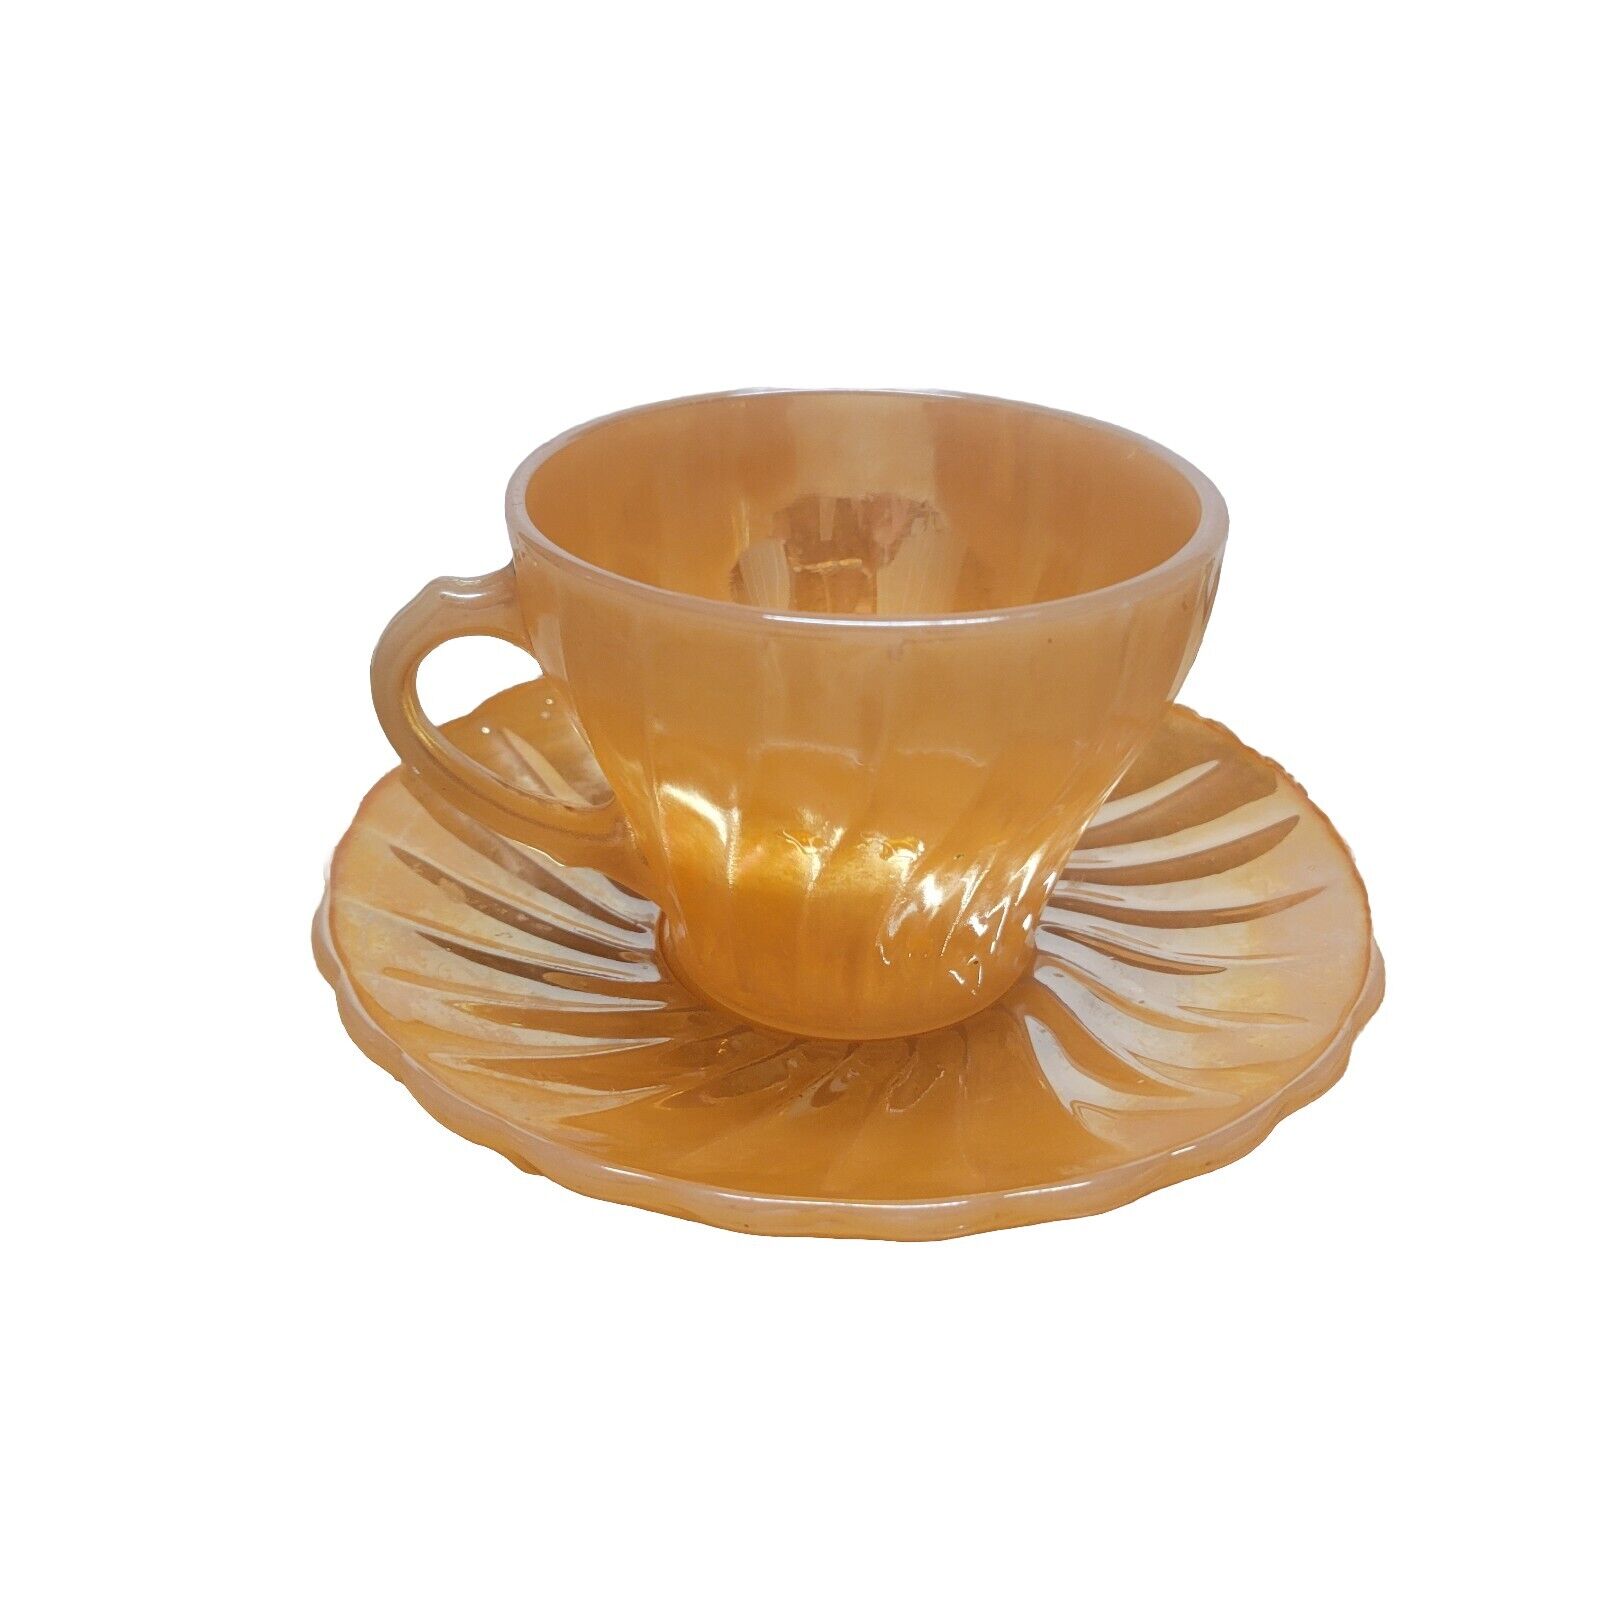 Fire-King Peach Lustre Shell Coffee Cup & Saucer Set Tea Anchor Hocking 70s Read